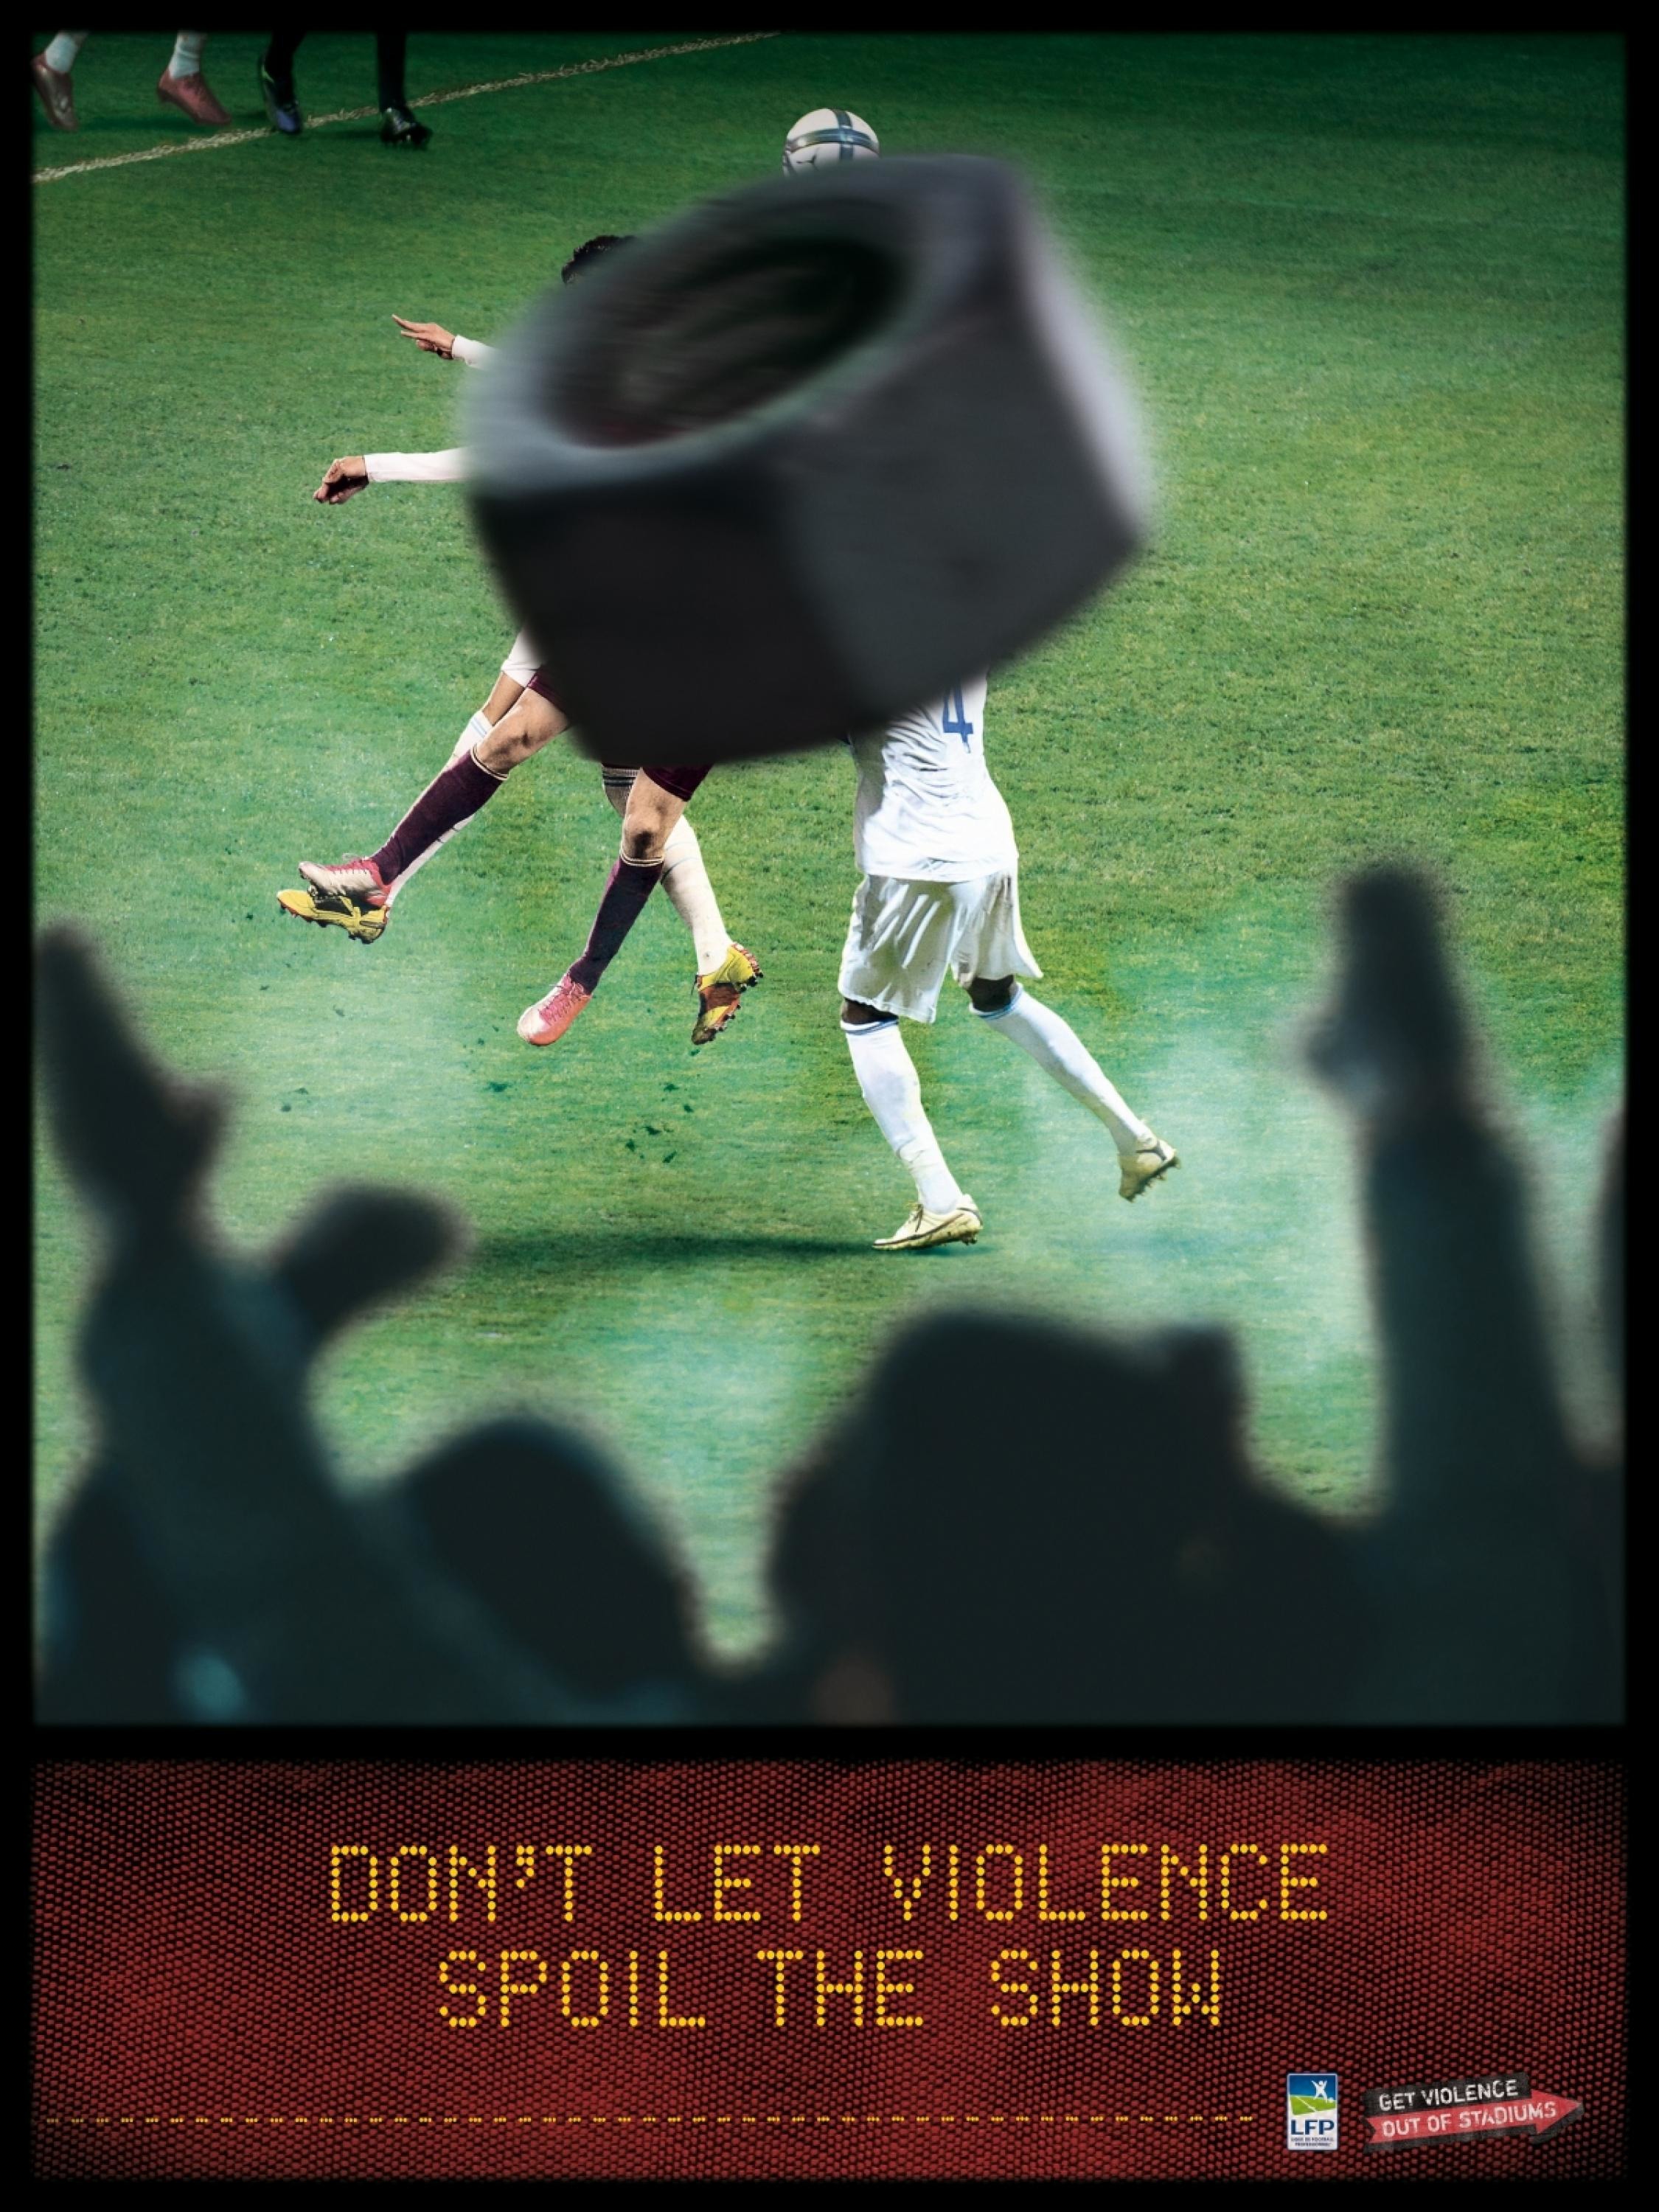 AGAINST FOOTBALL VIOLENCE